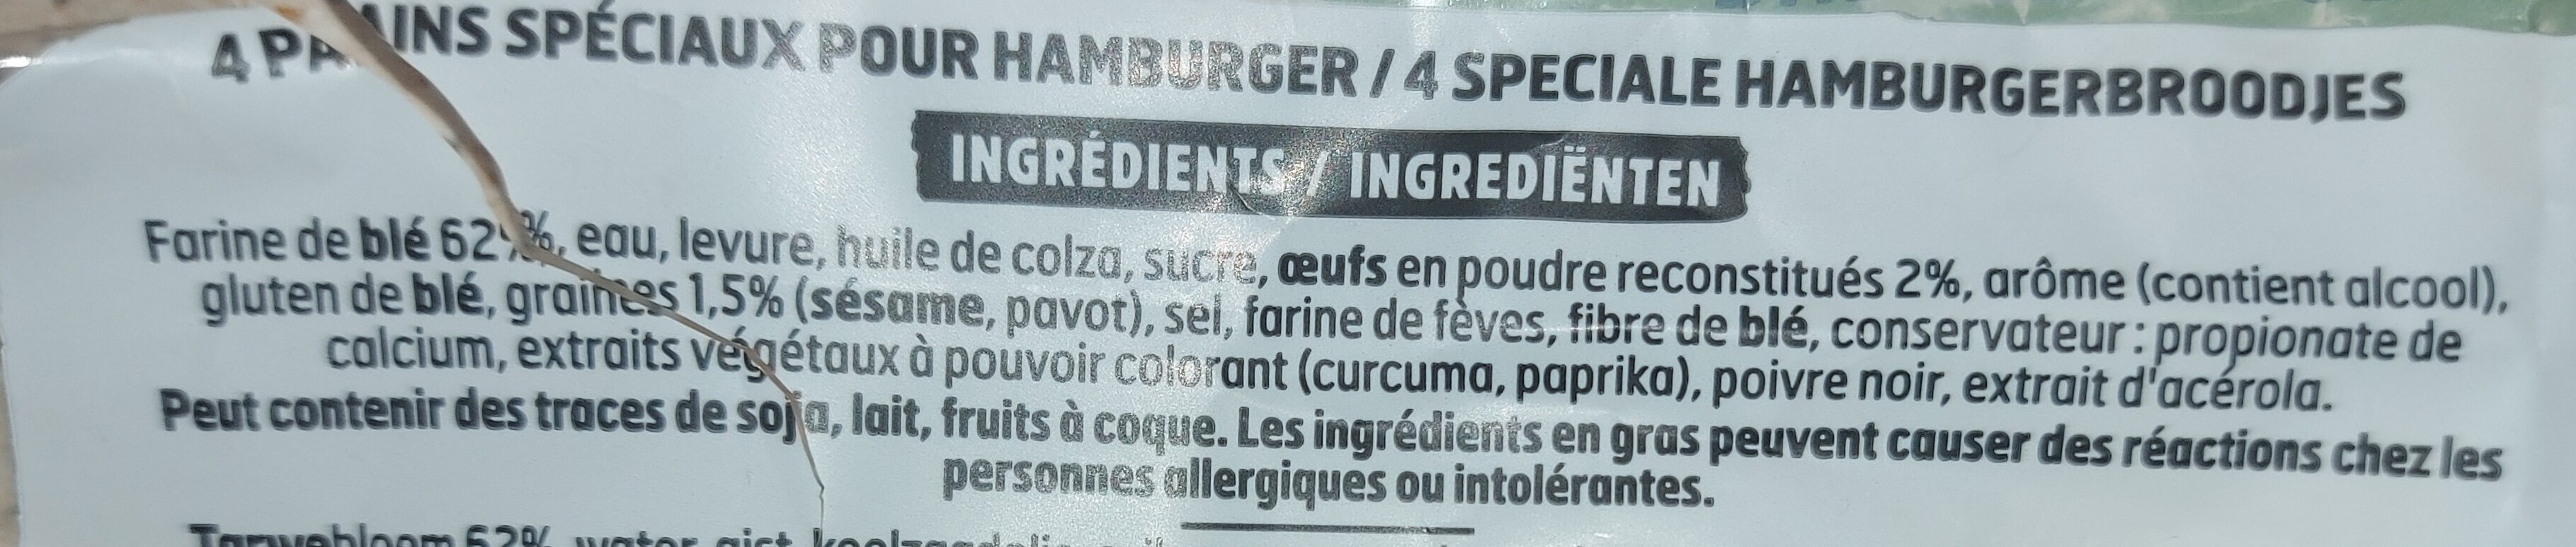 Harrys pain burger brioché aux graines x4 - المكونات - fr